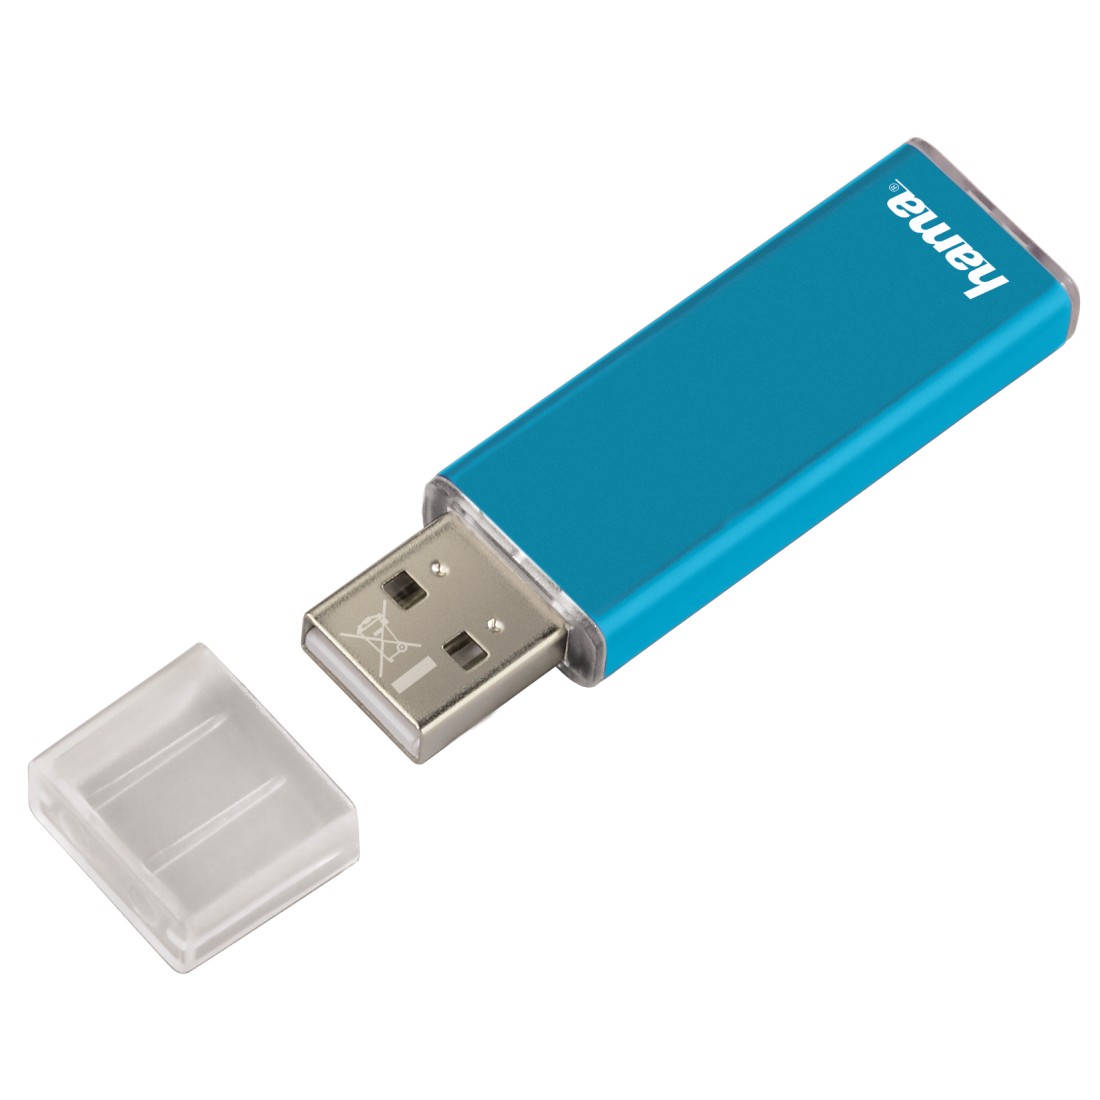 00104388 Hama "Valore" FlashPen, USB 2.0, 16 GB, 25 MB/s, turquoise |  hama.com